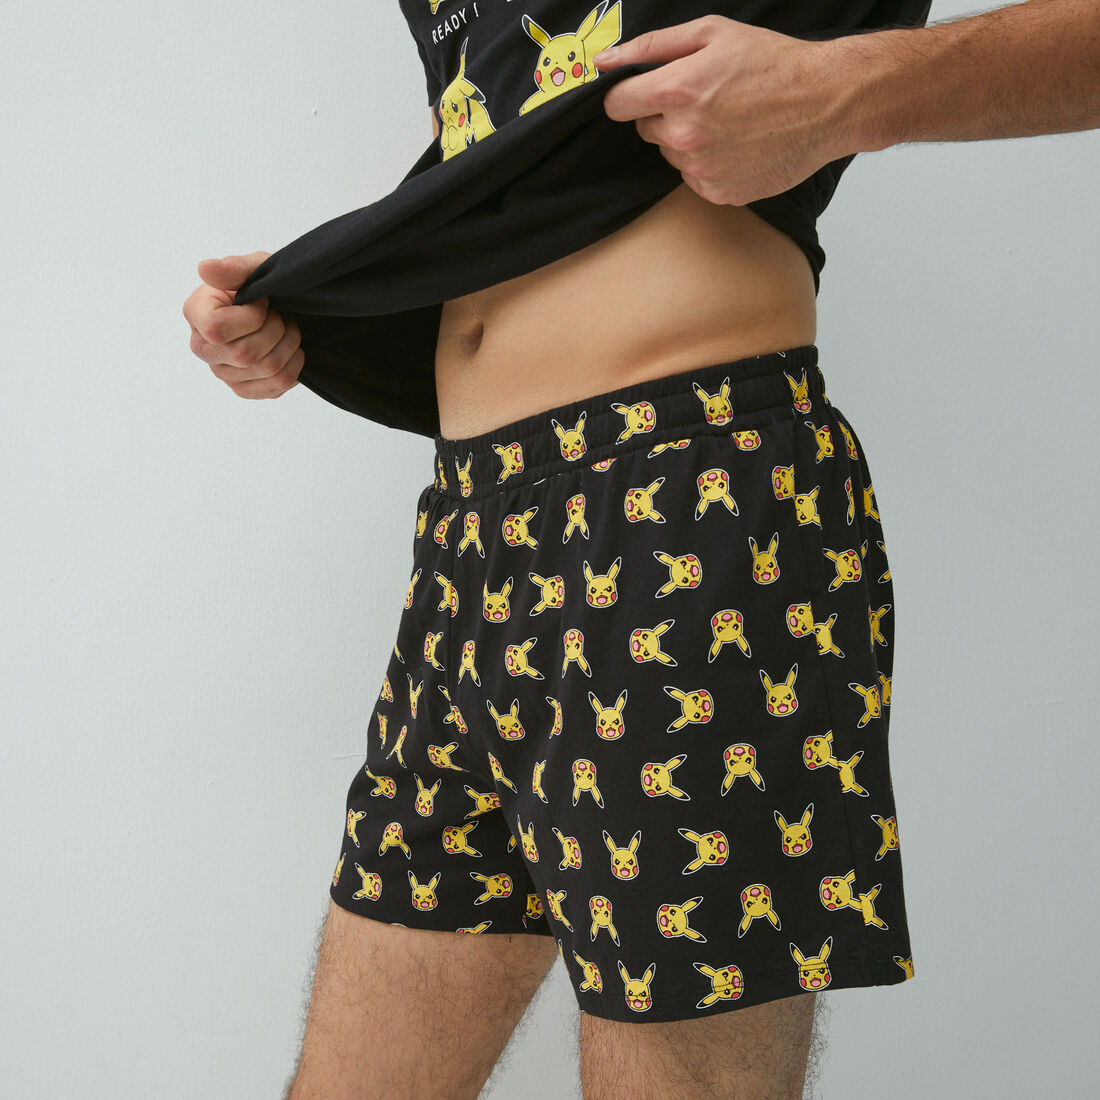 Pikachu t-shirt and boxer shorts set;